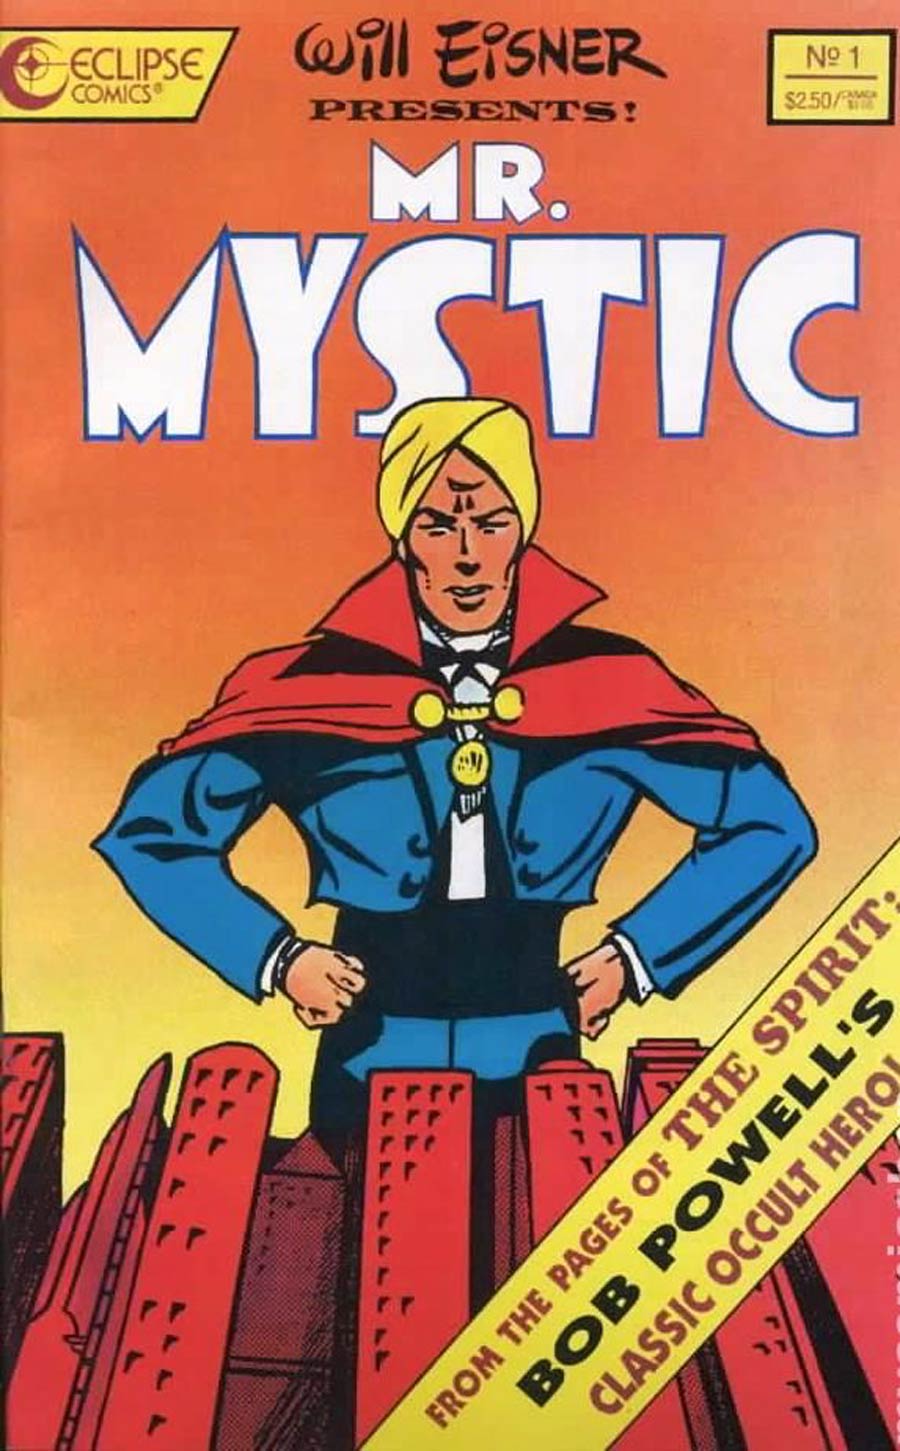 Will Eisner Presents Mr Mystic #1